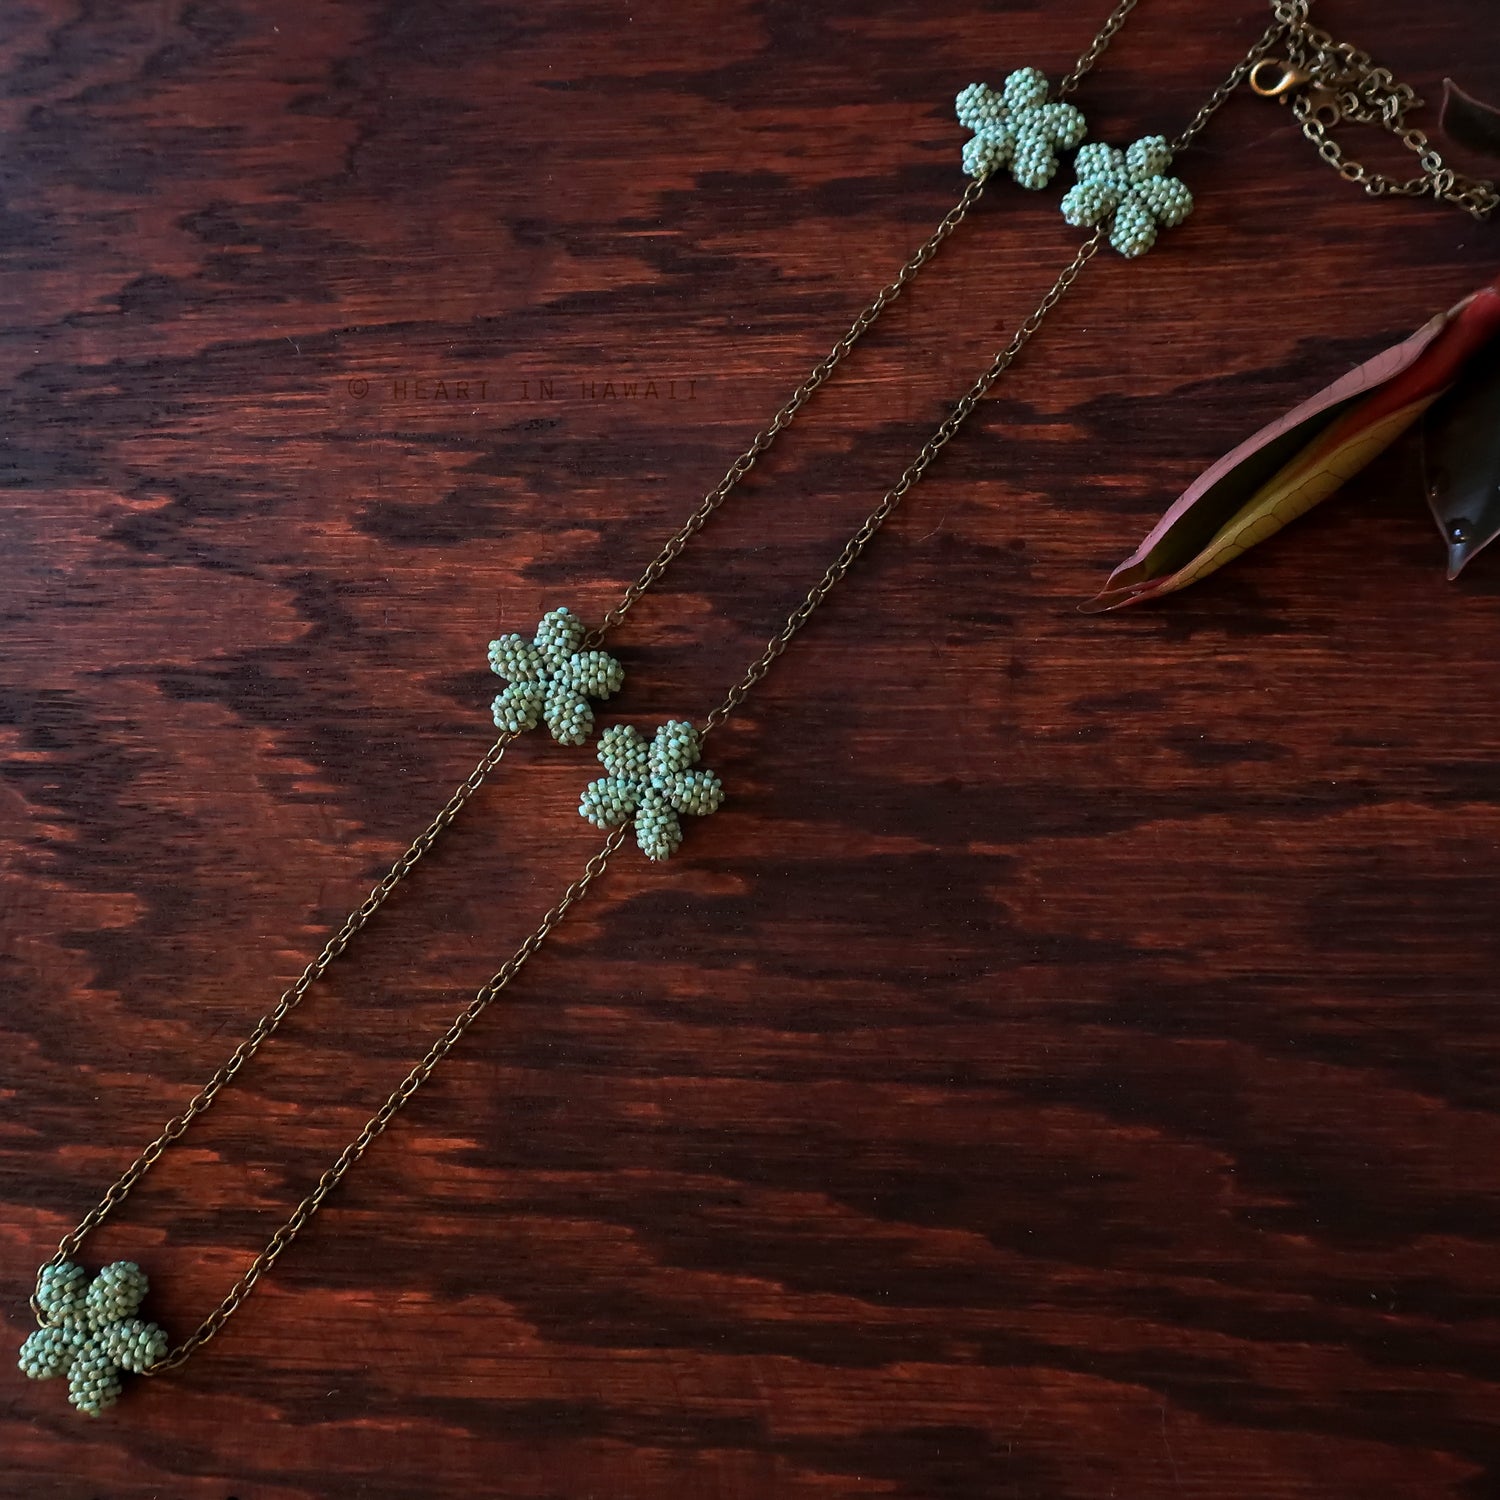 Heart in Hawaii Lei Flower Necklace - 5 Plumeria on 30-inch Bronze Chain